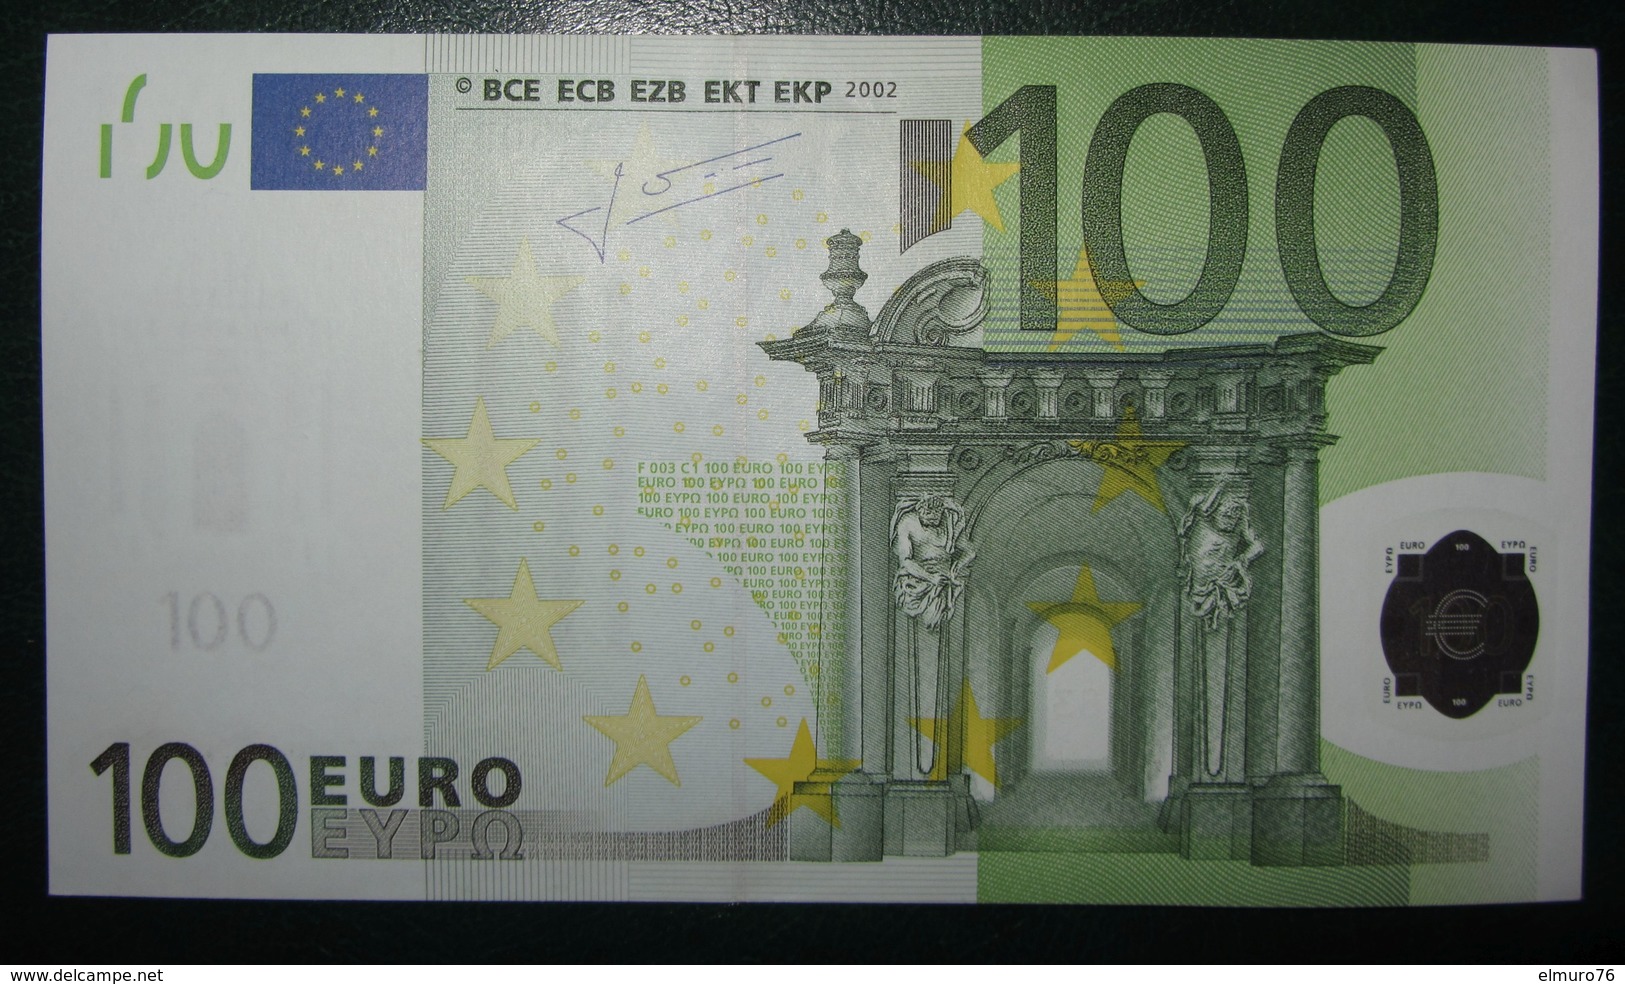 100 EURO F003C1 Austria Trichet Serie N Perfect UNC - 100 Euro